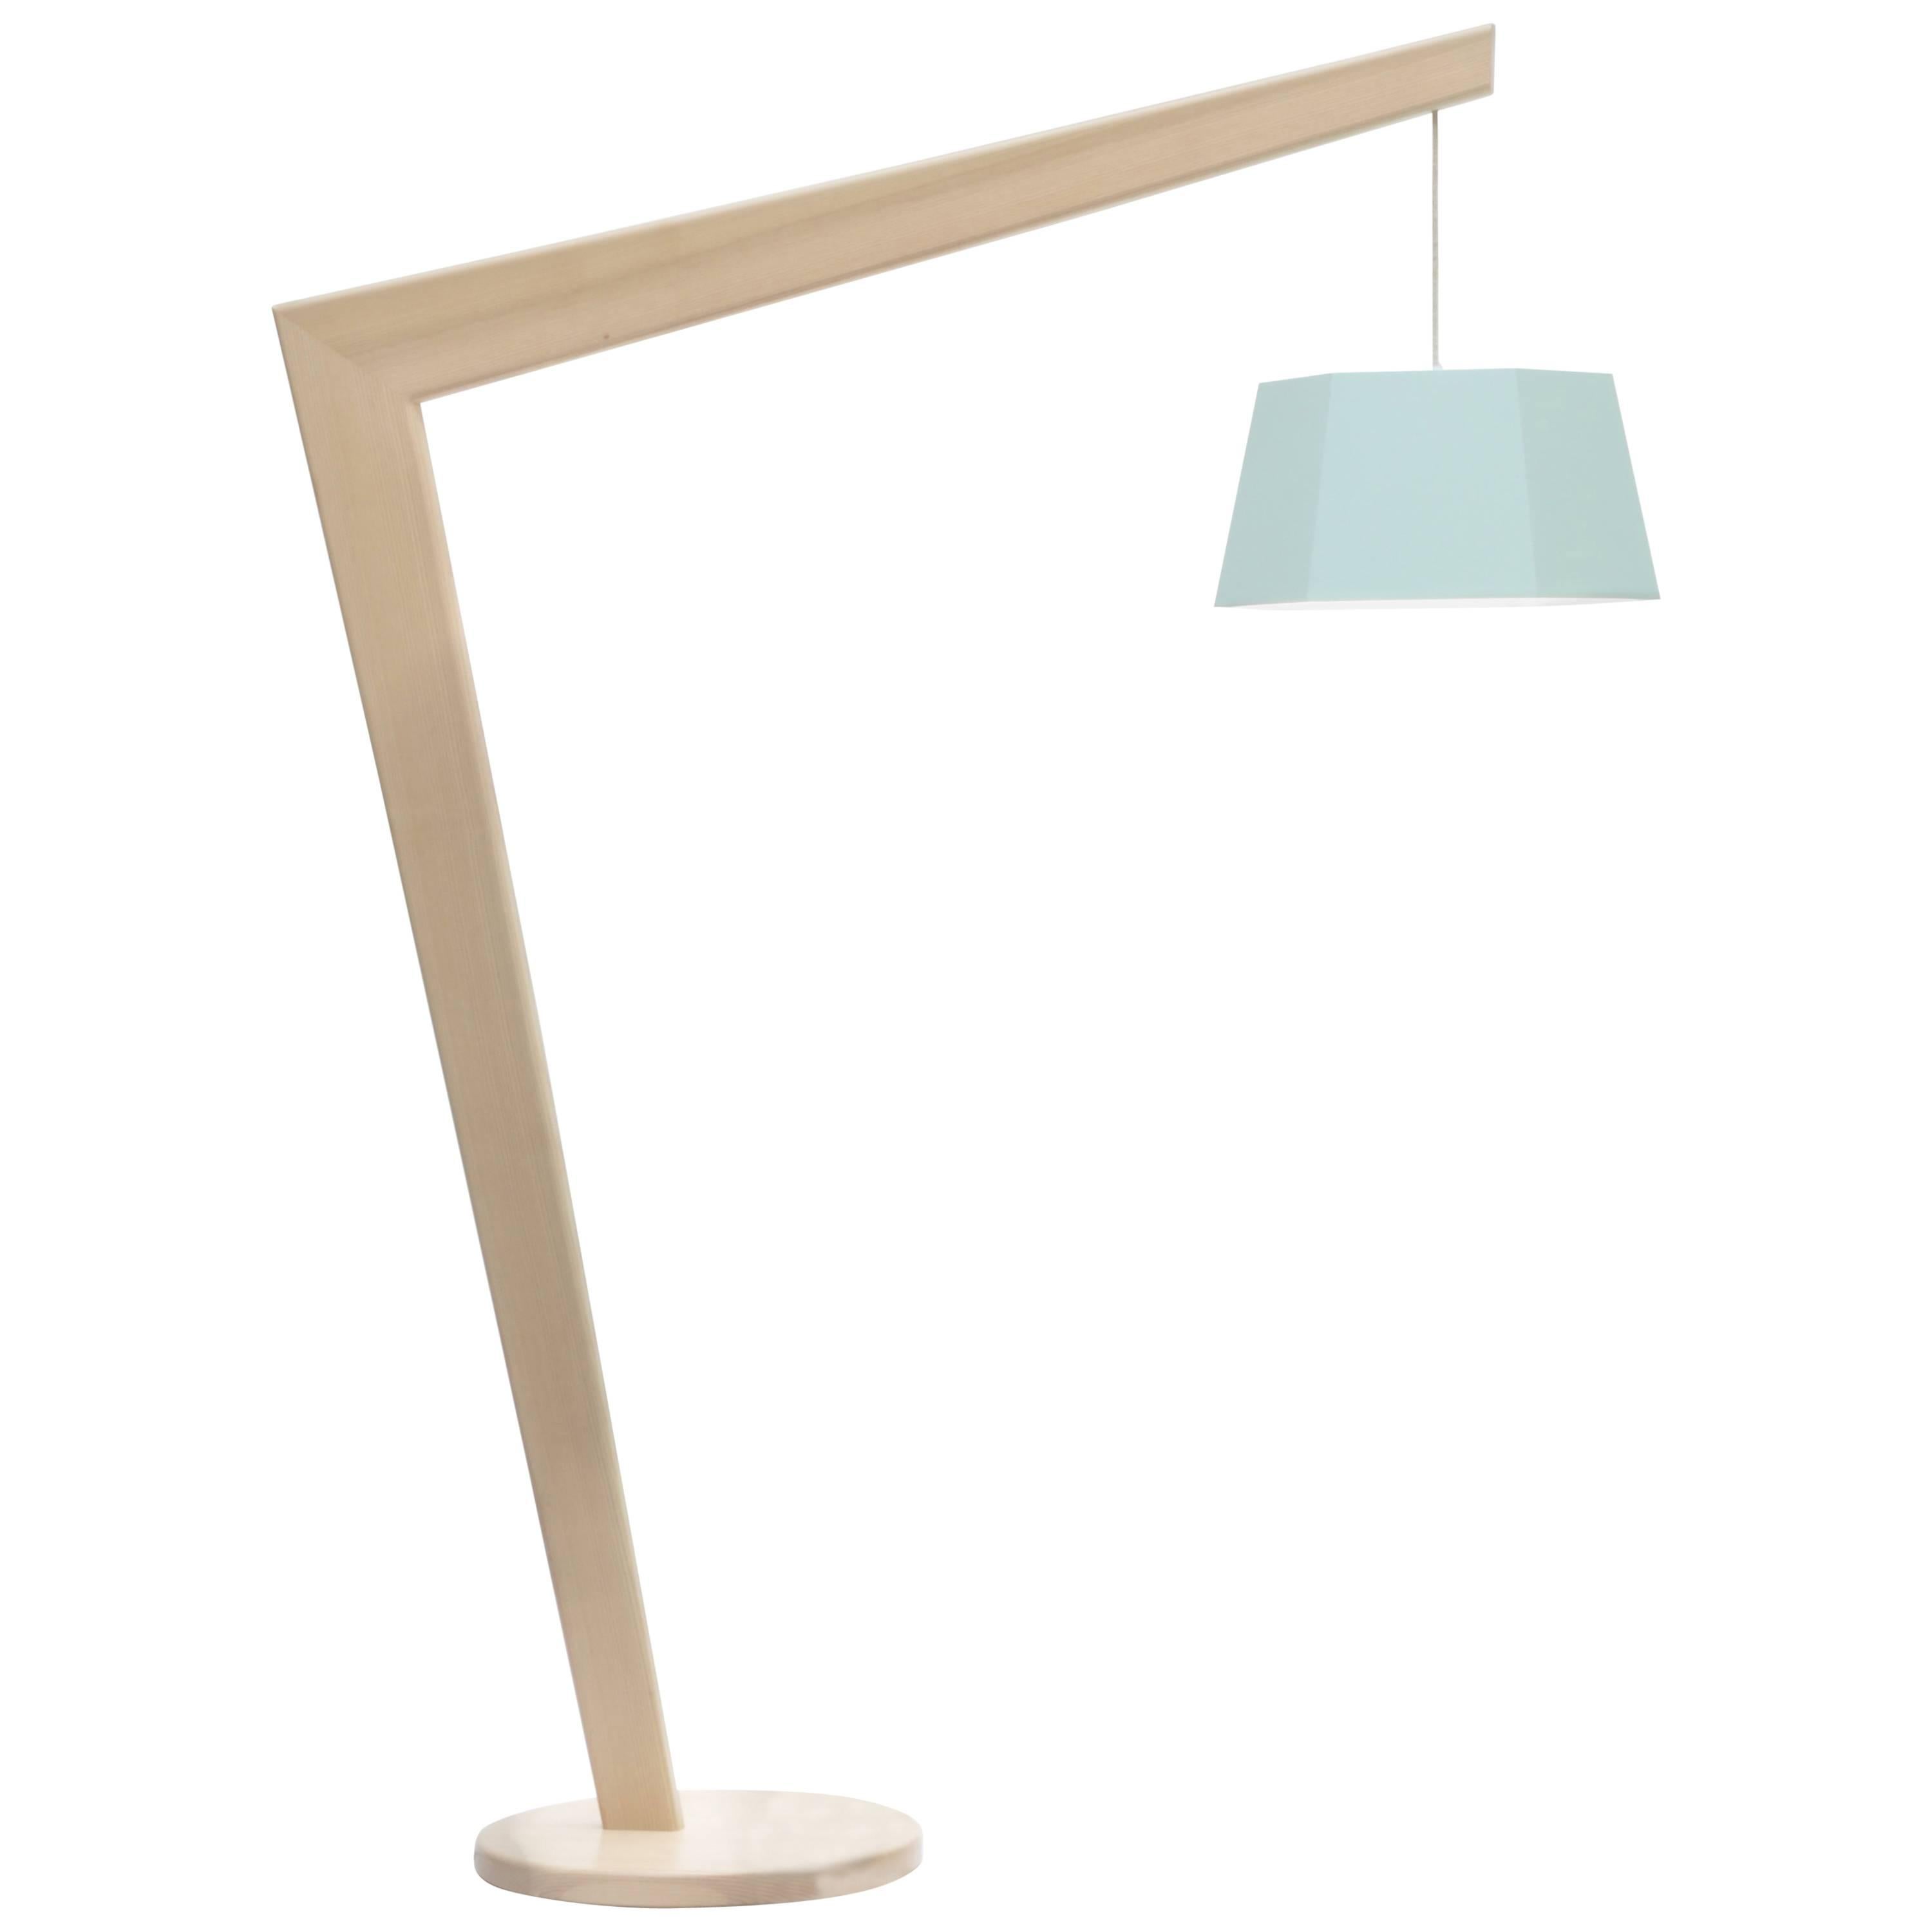  Contemporary Scandinavian Design "Grue" Floor Lamp in Oiled Ash  For Sale